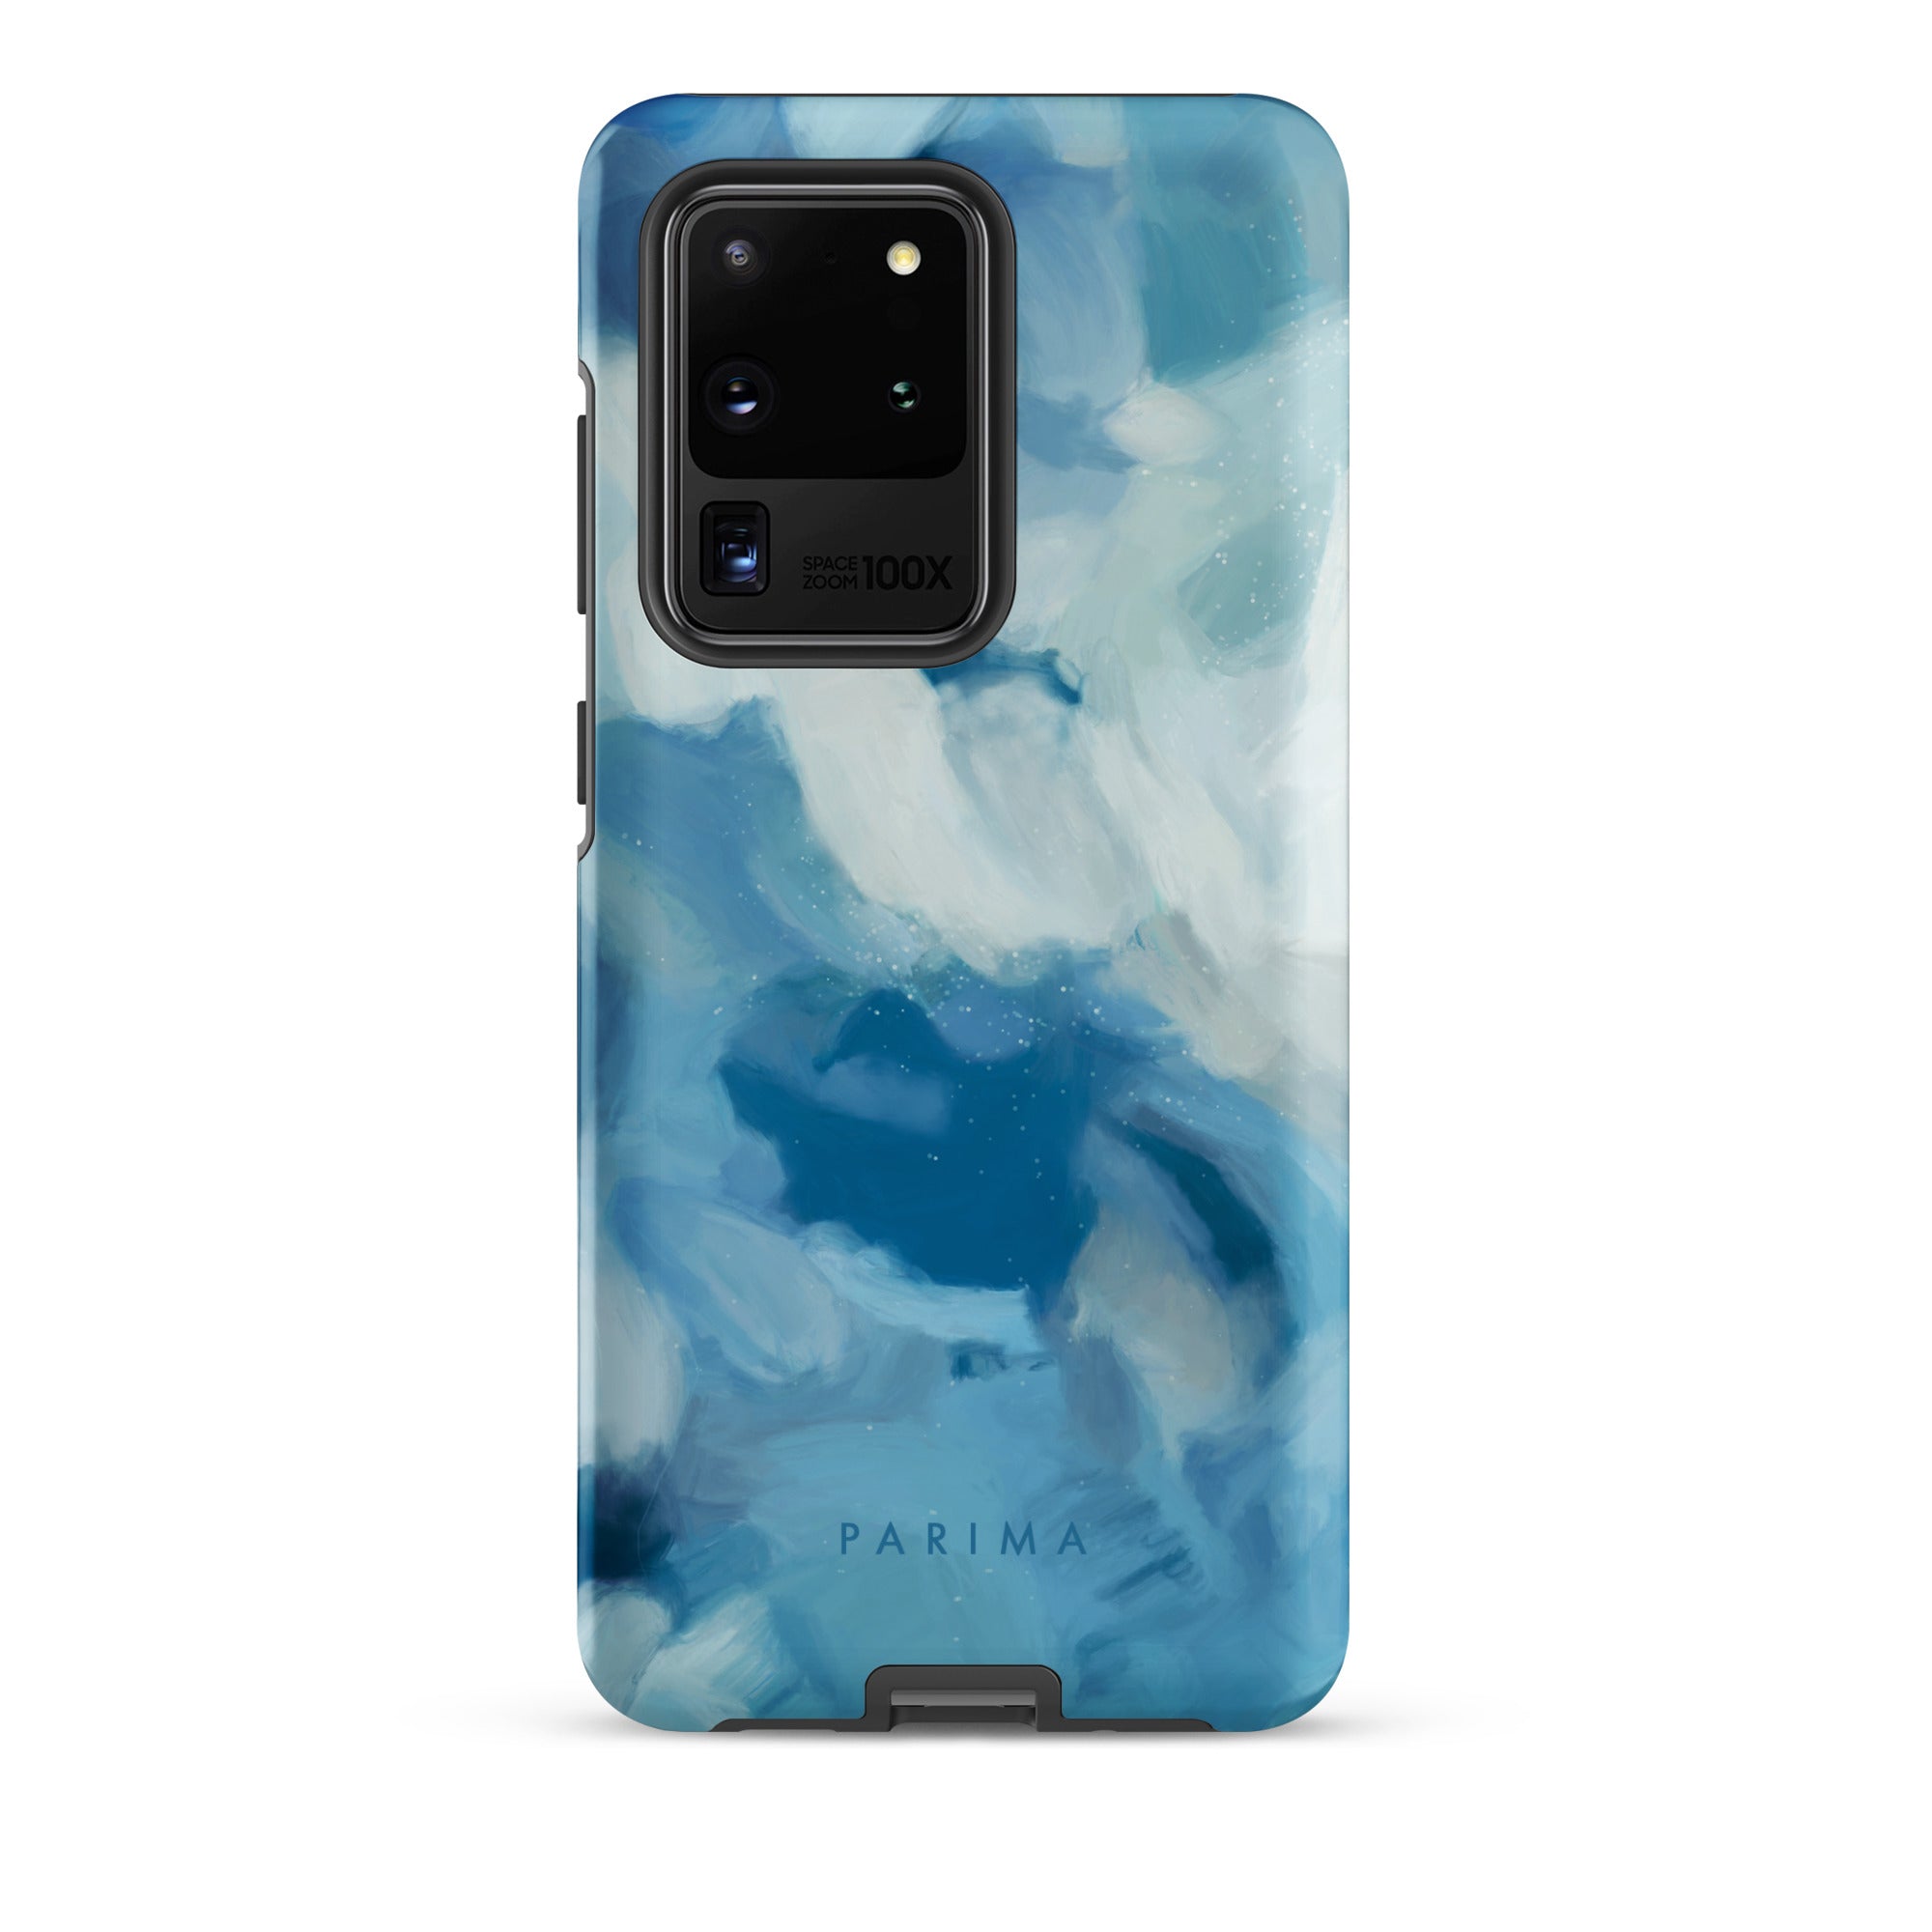 Liviana, blue abstract art on Samsung Galaxy S20 Ultra tough case by Parima Studio